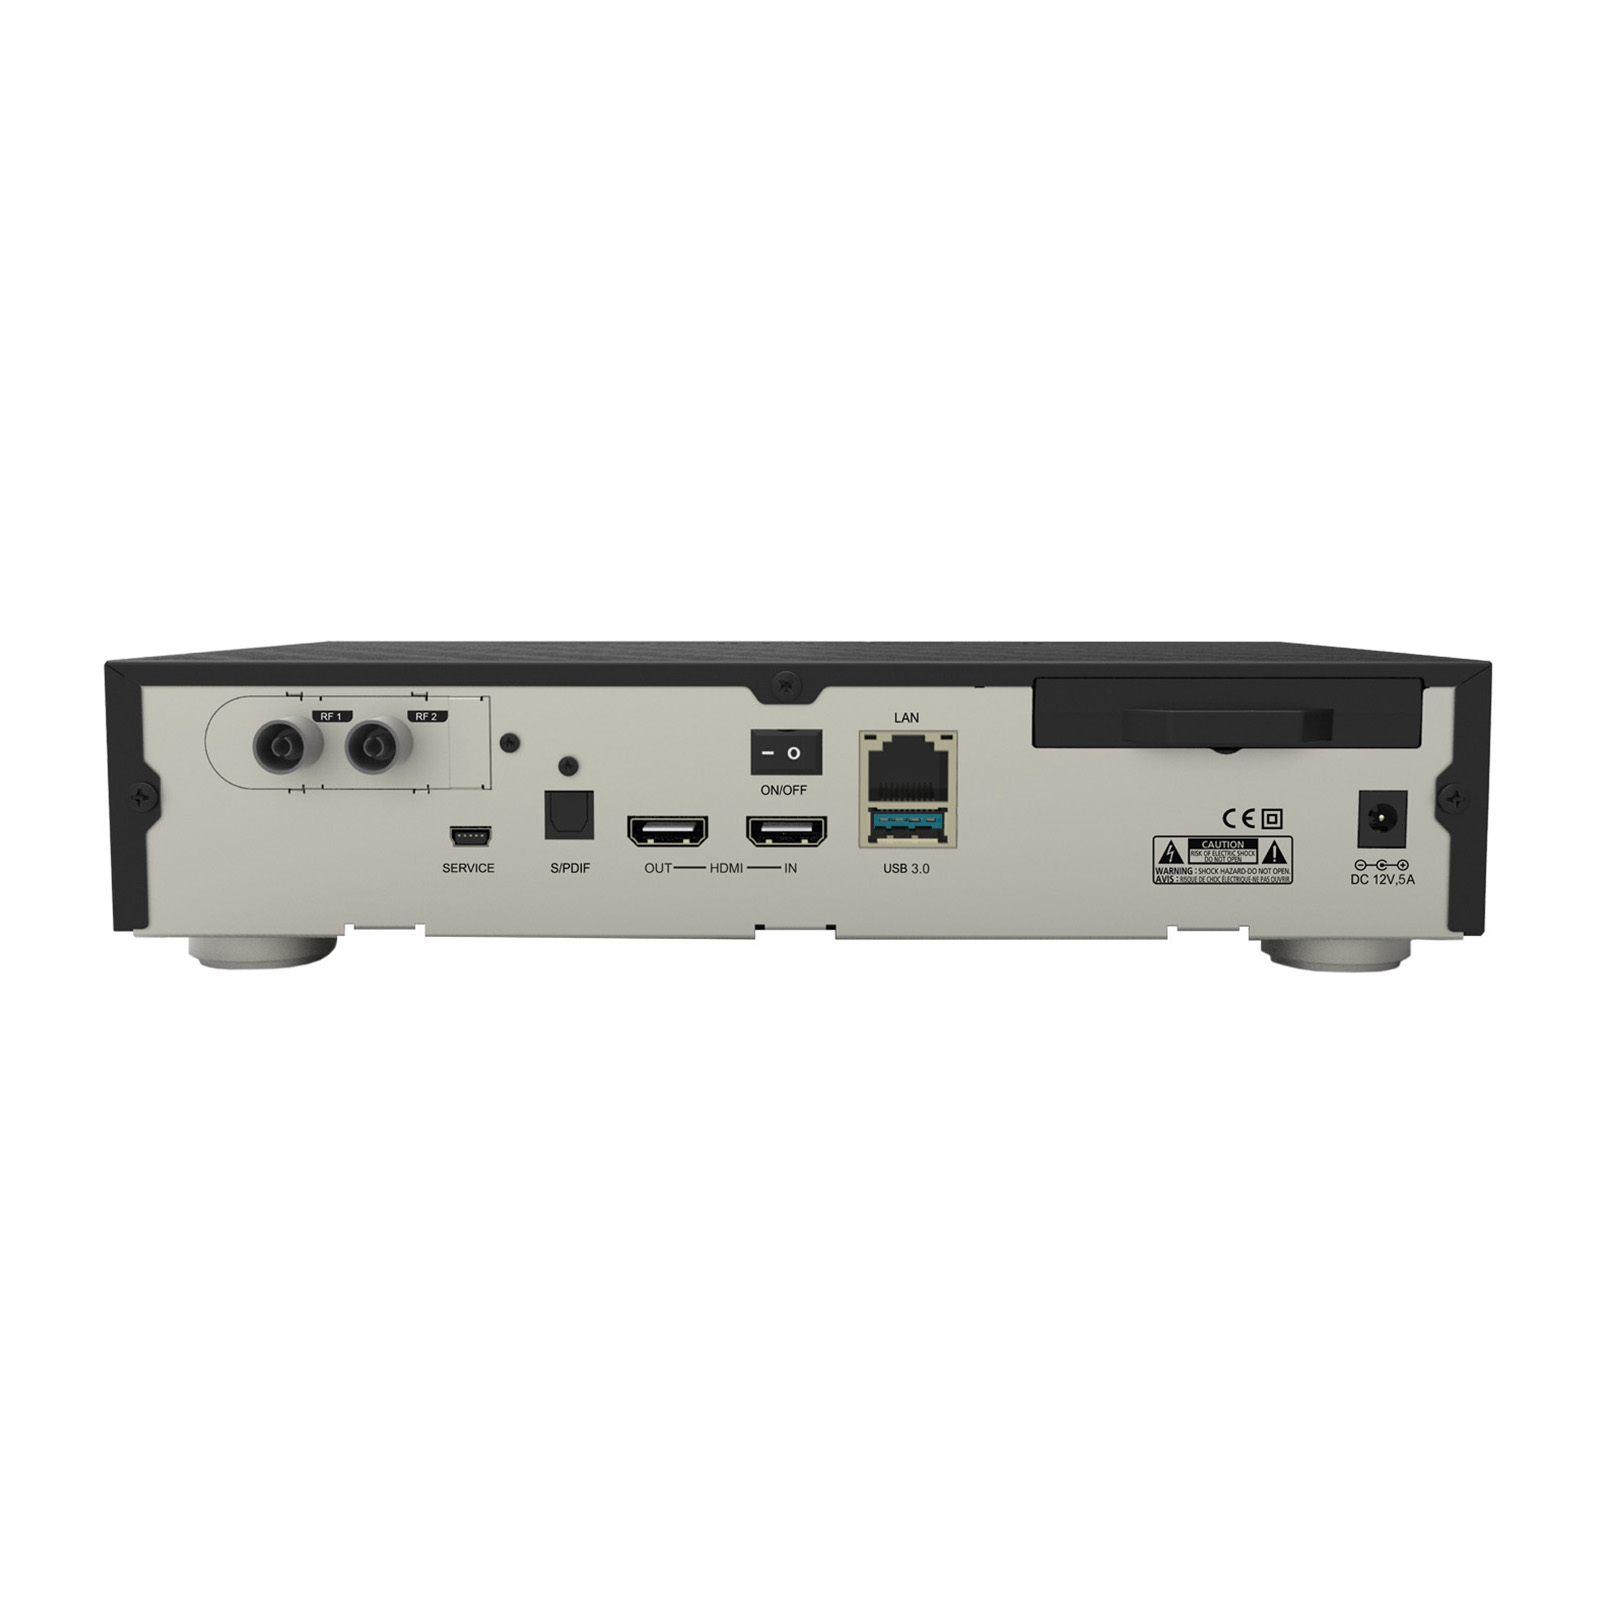 1TB Tuner, DM900 Schwarz) Kabel-Receiver DREAM 1xDVB-C/T2 MULTIMEDIA (Twin RC20